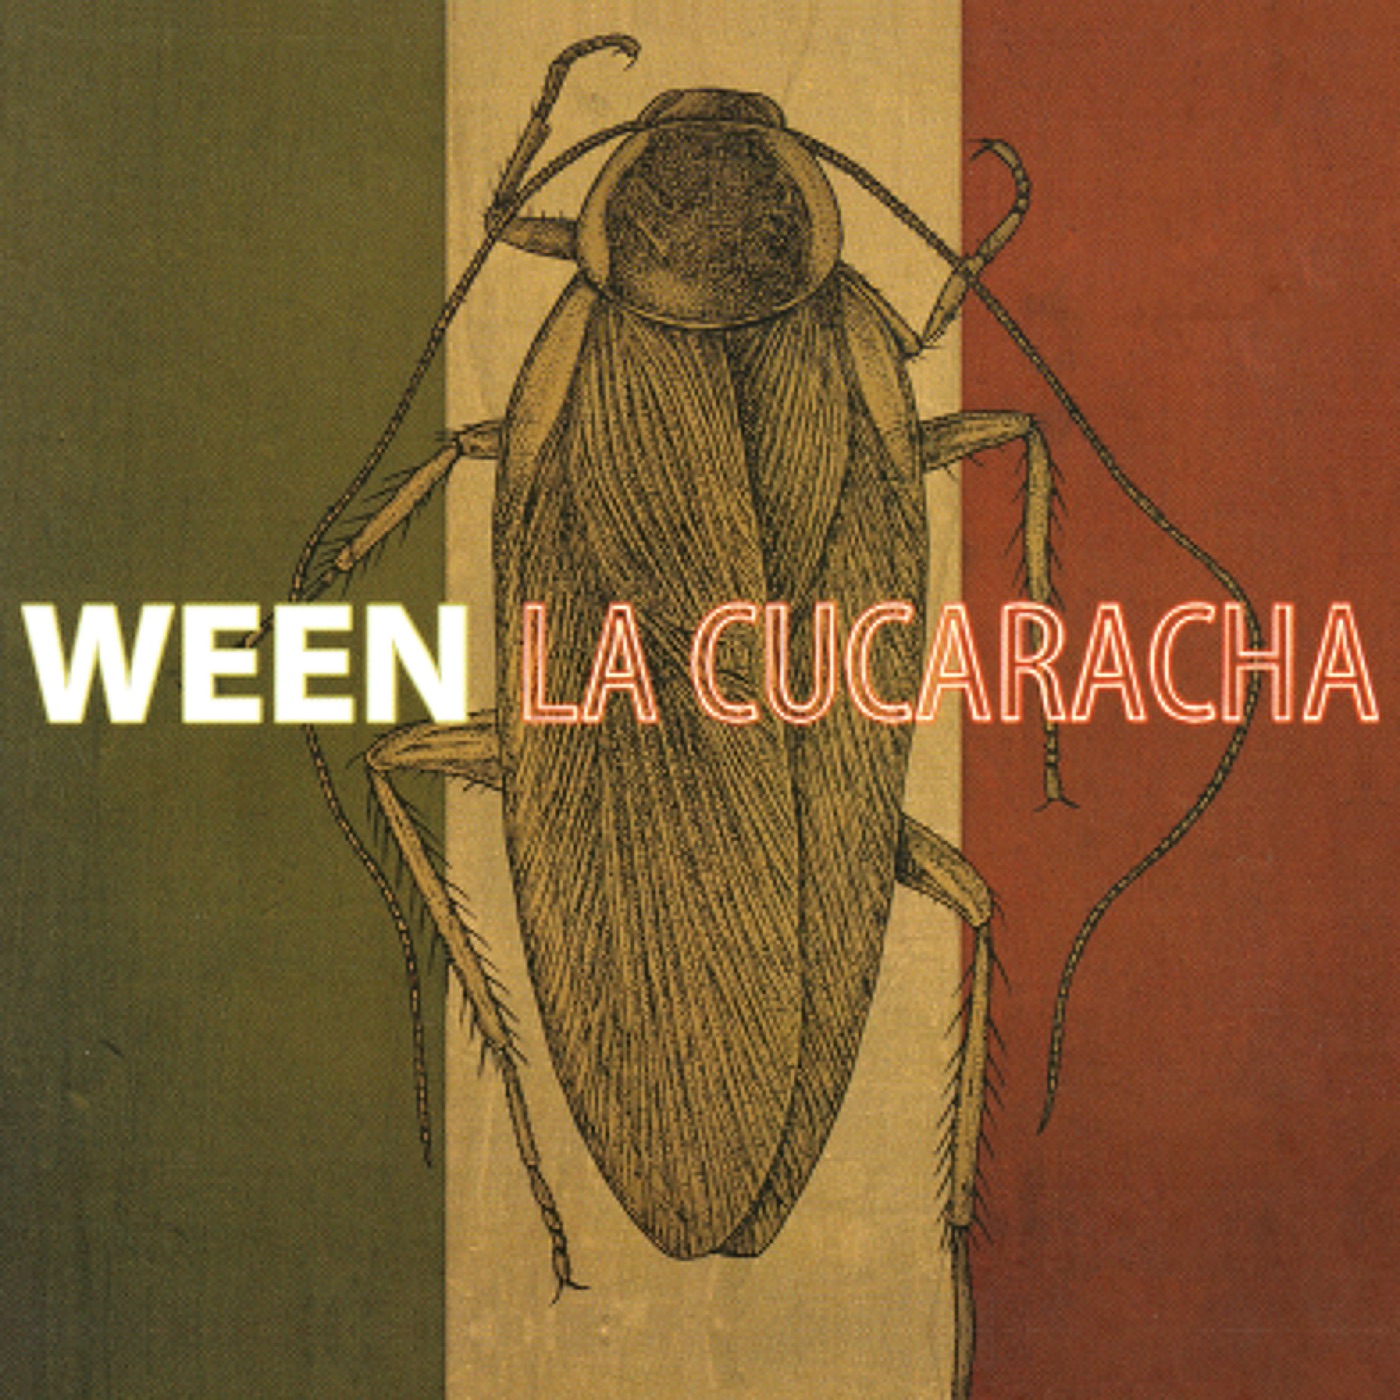 La Cucaracha by Ween